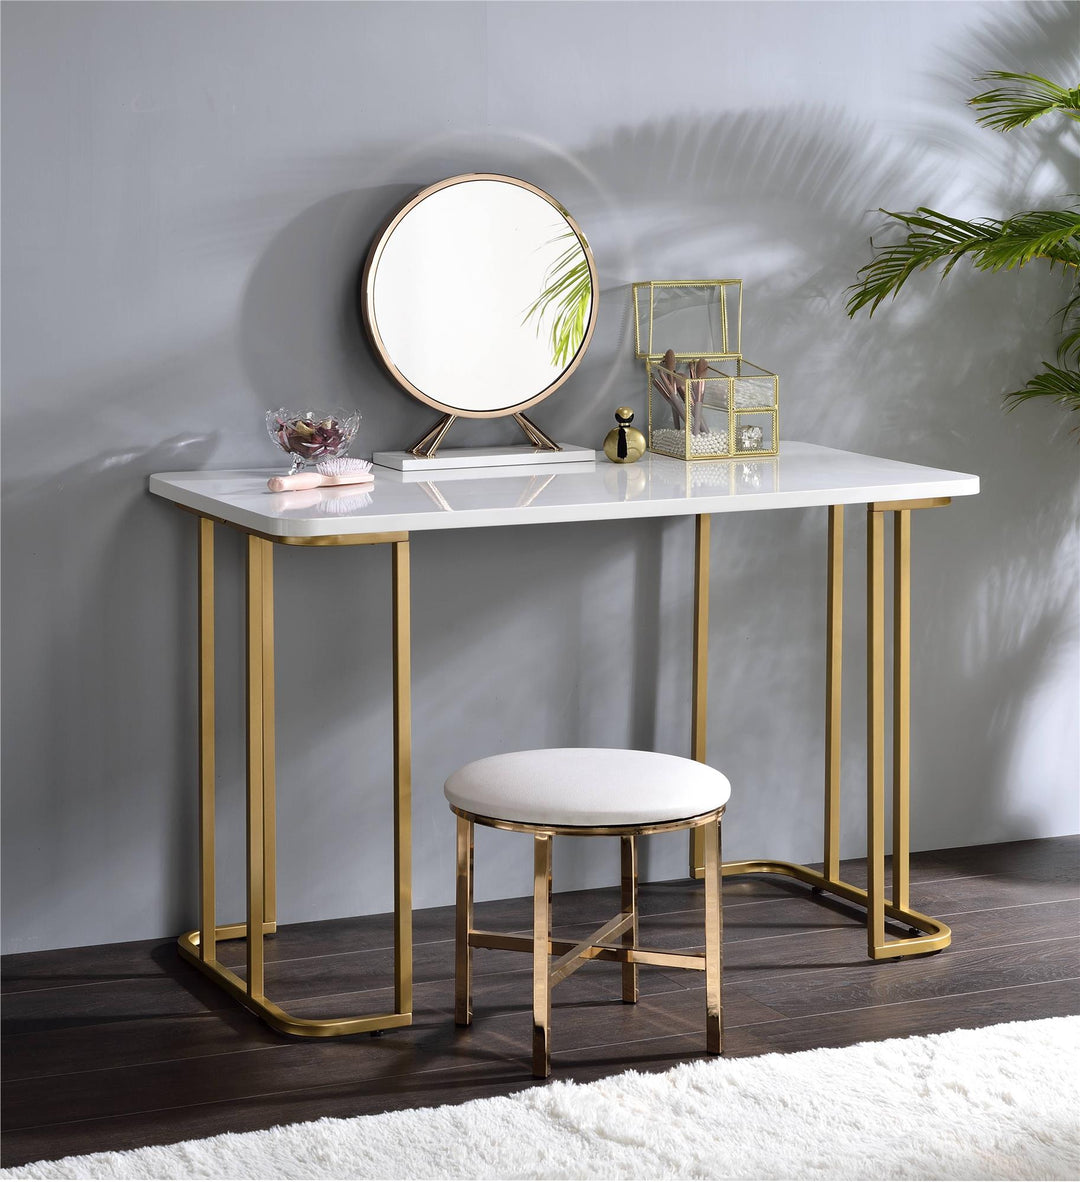 Estie desk for writing and vanity setup -  White